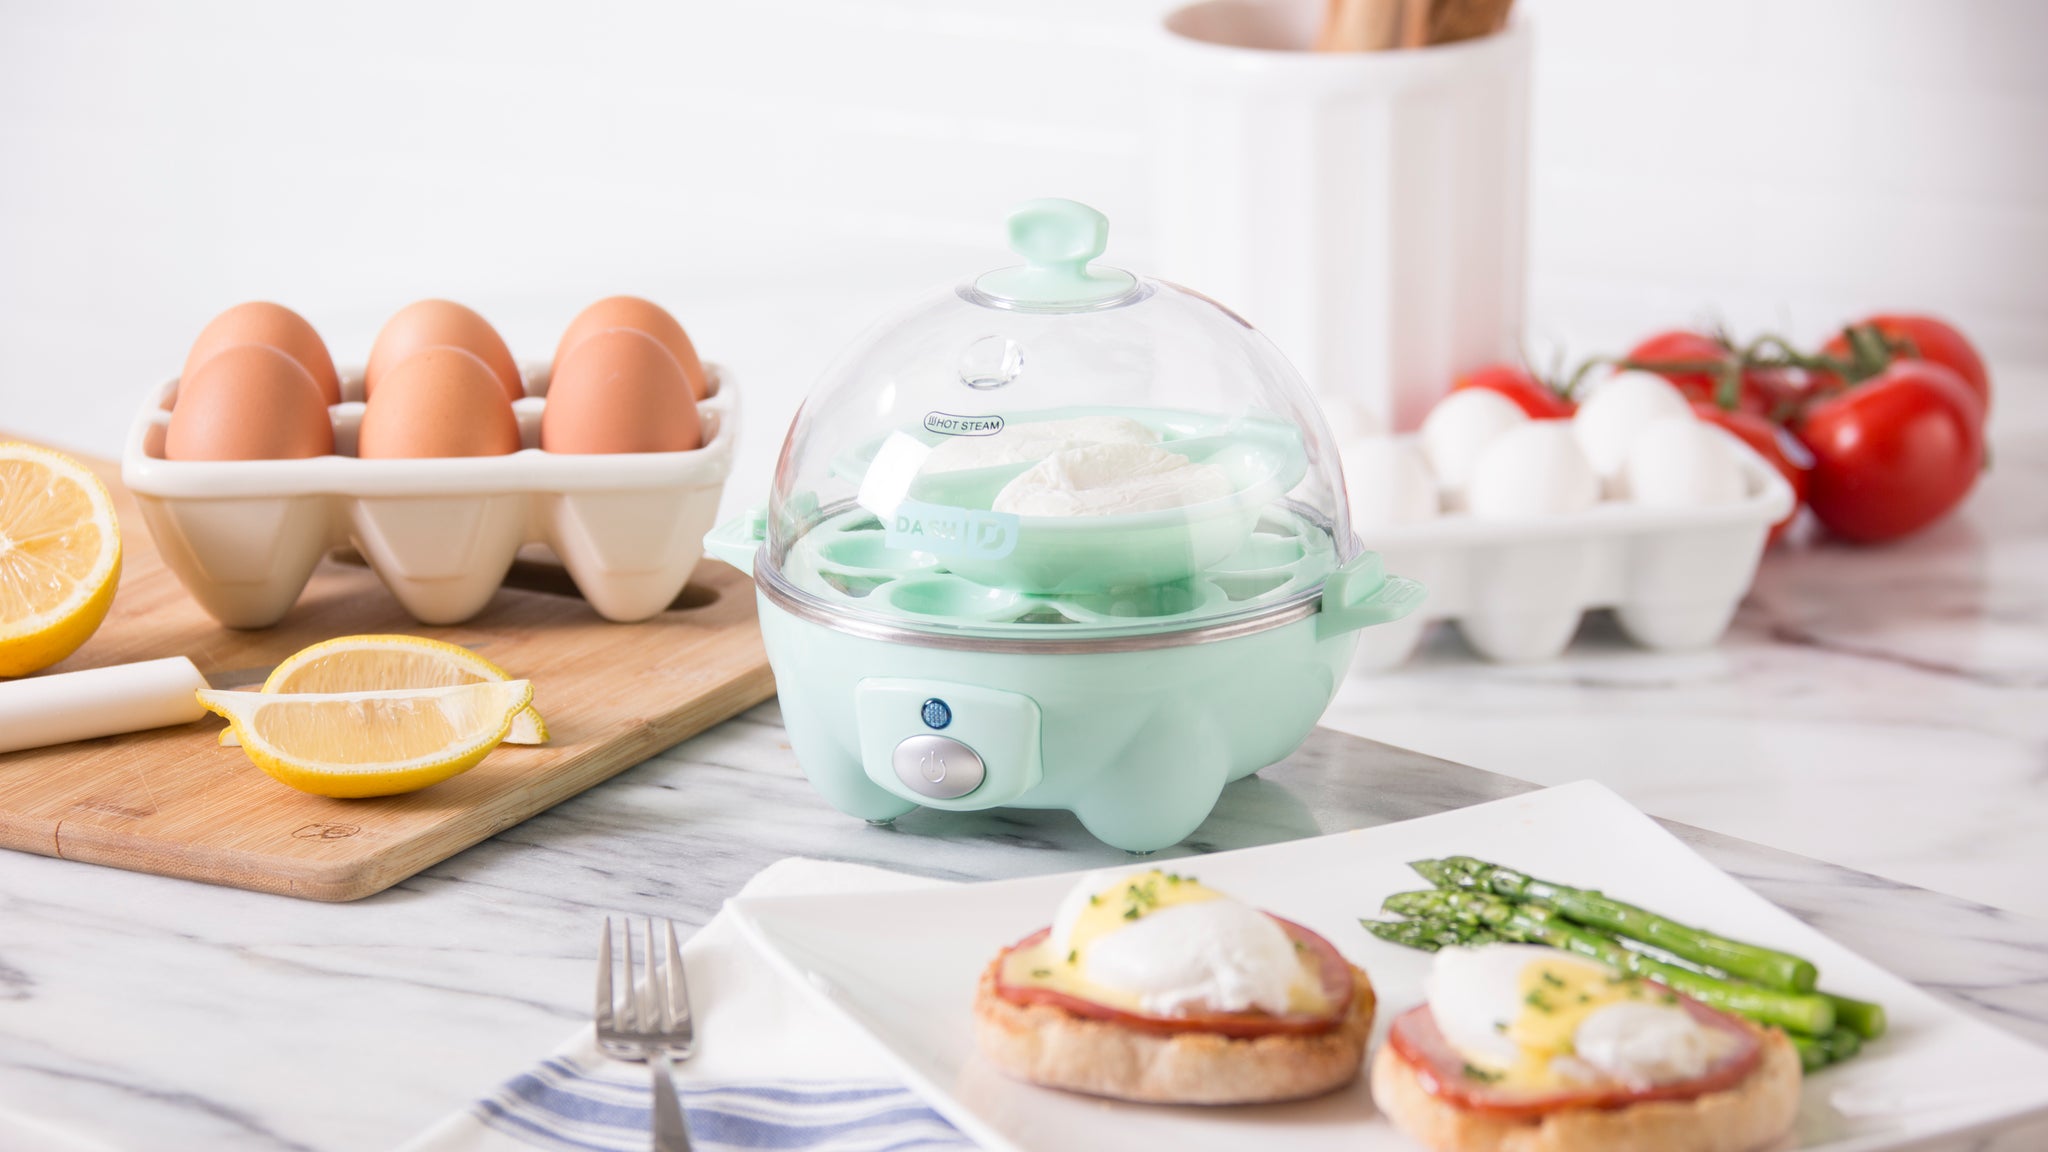 Dash Rapid Egg Cooker: 6 Egg Capacity Electric Egg Cooker for Hard